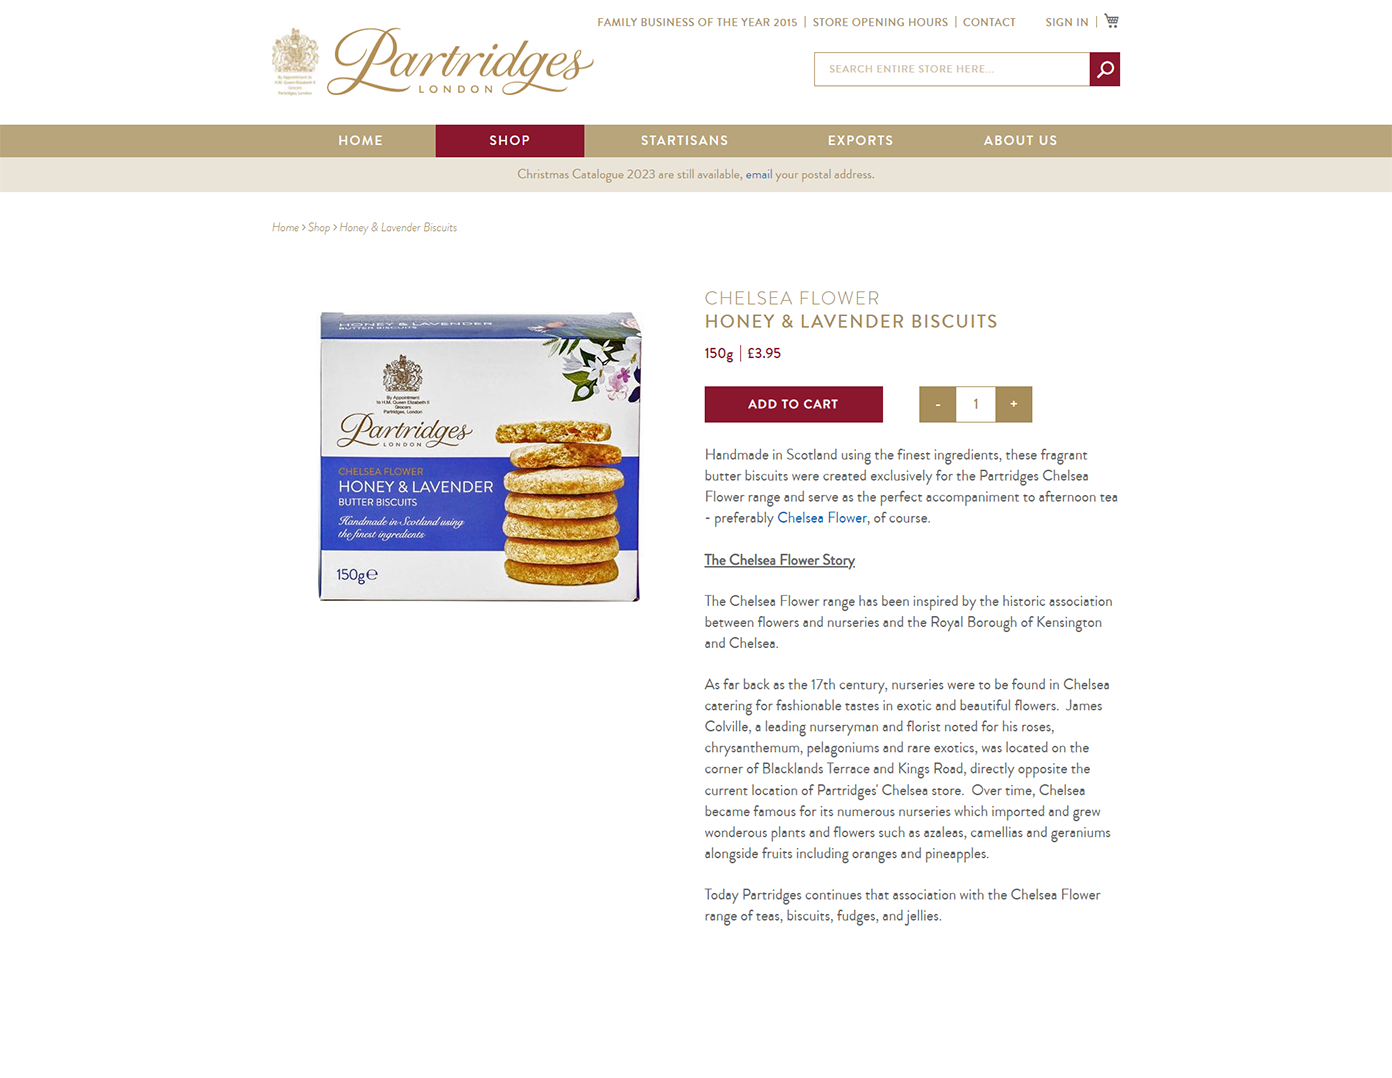 Partridges Product Page